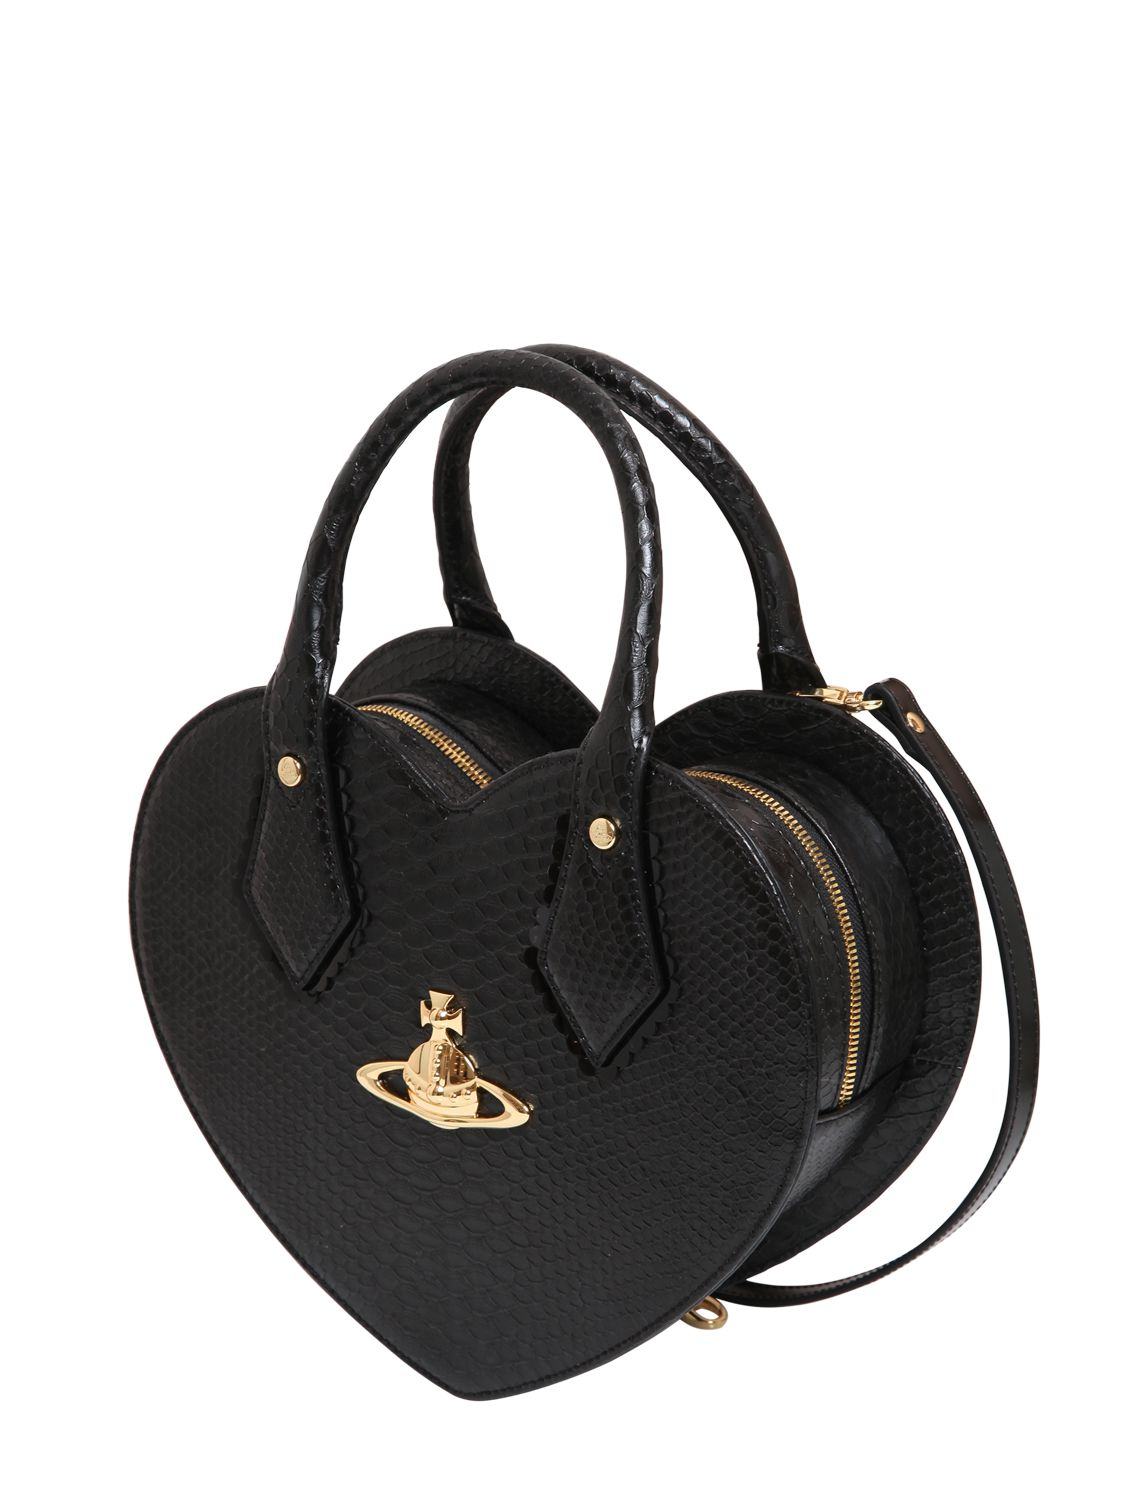 Vivienne Westwood Heart Snake Embossed Faux Leather Bag in Black | Lyst